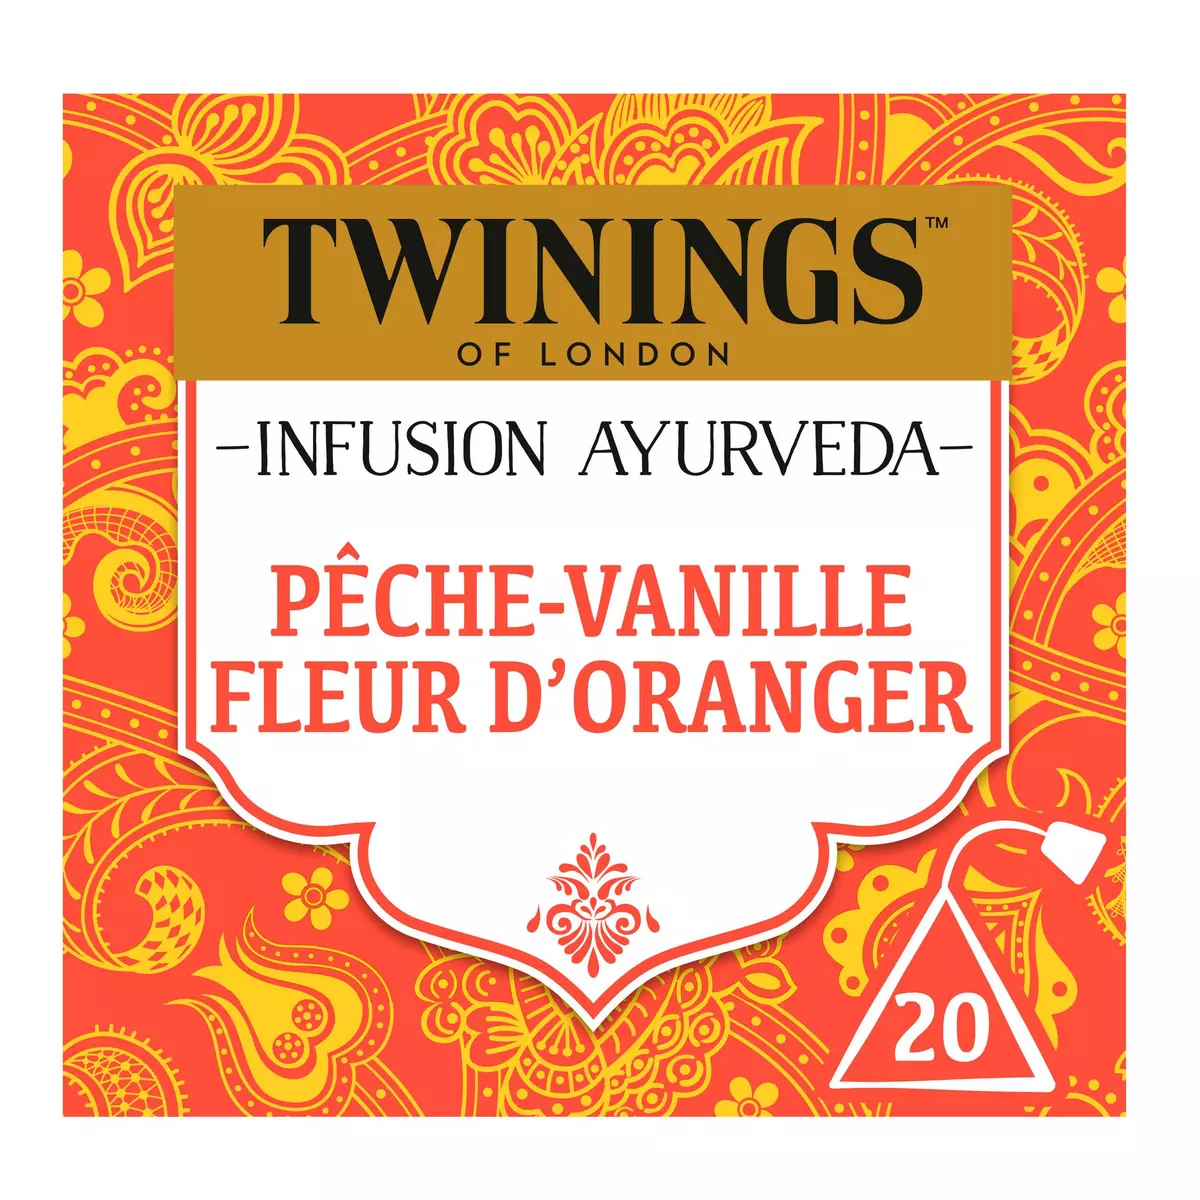 TWININGS Infusion ayurveda pêche vanille fleur d'oranger 20 sachets 30g